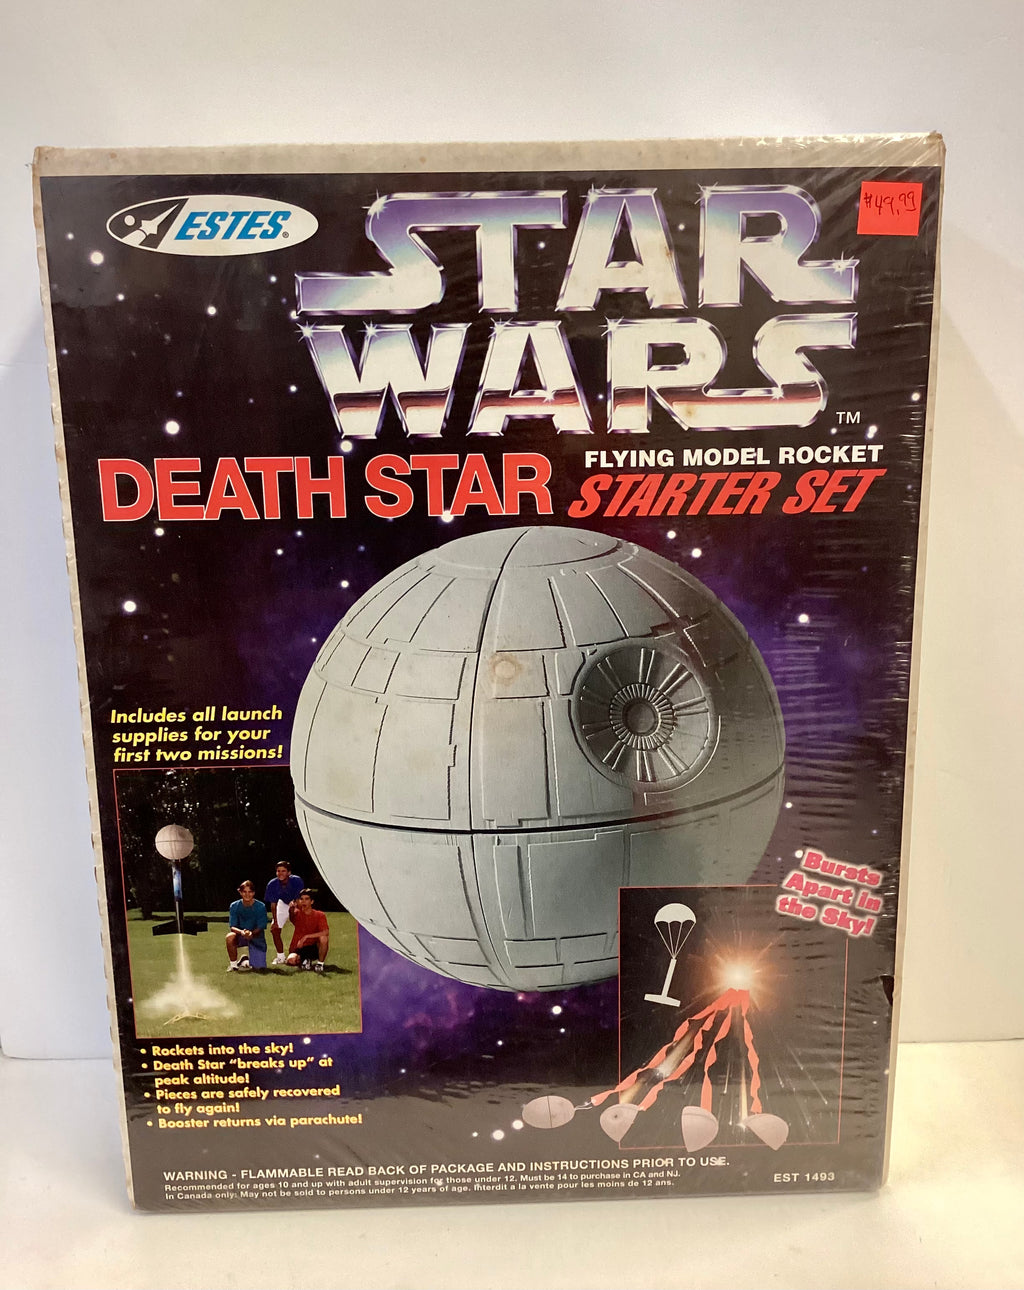 Estes Star Wars Death Star Starter Set EST1493